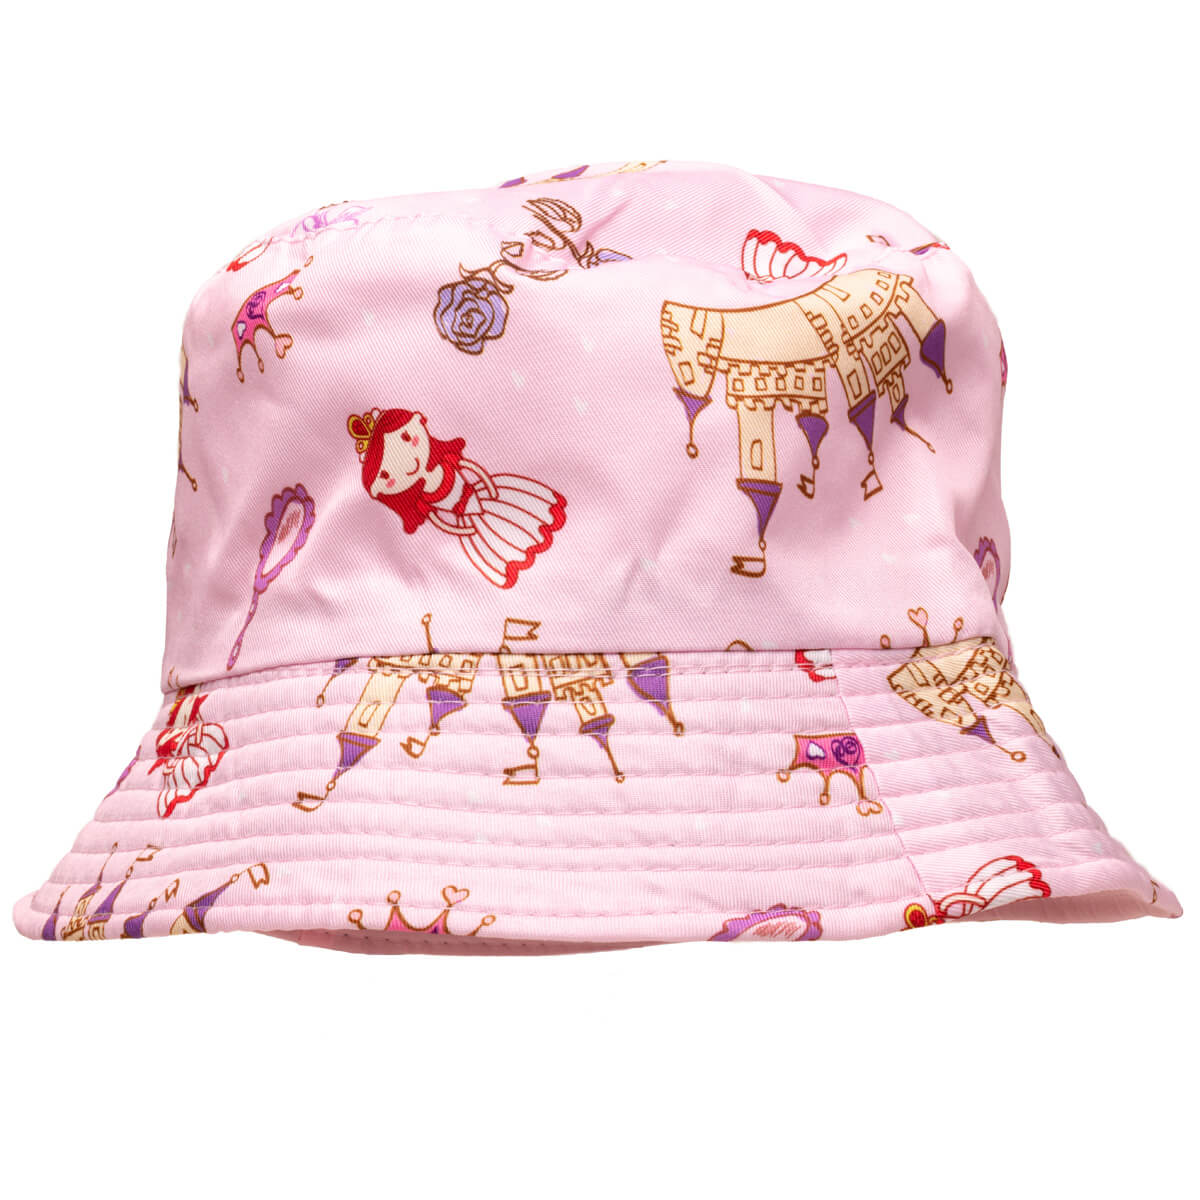 Patterned children's fishing hat reversible